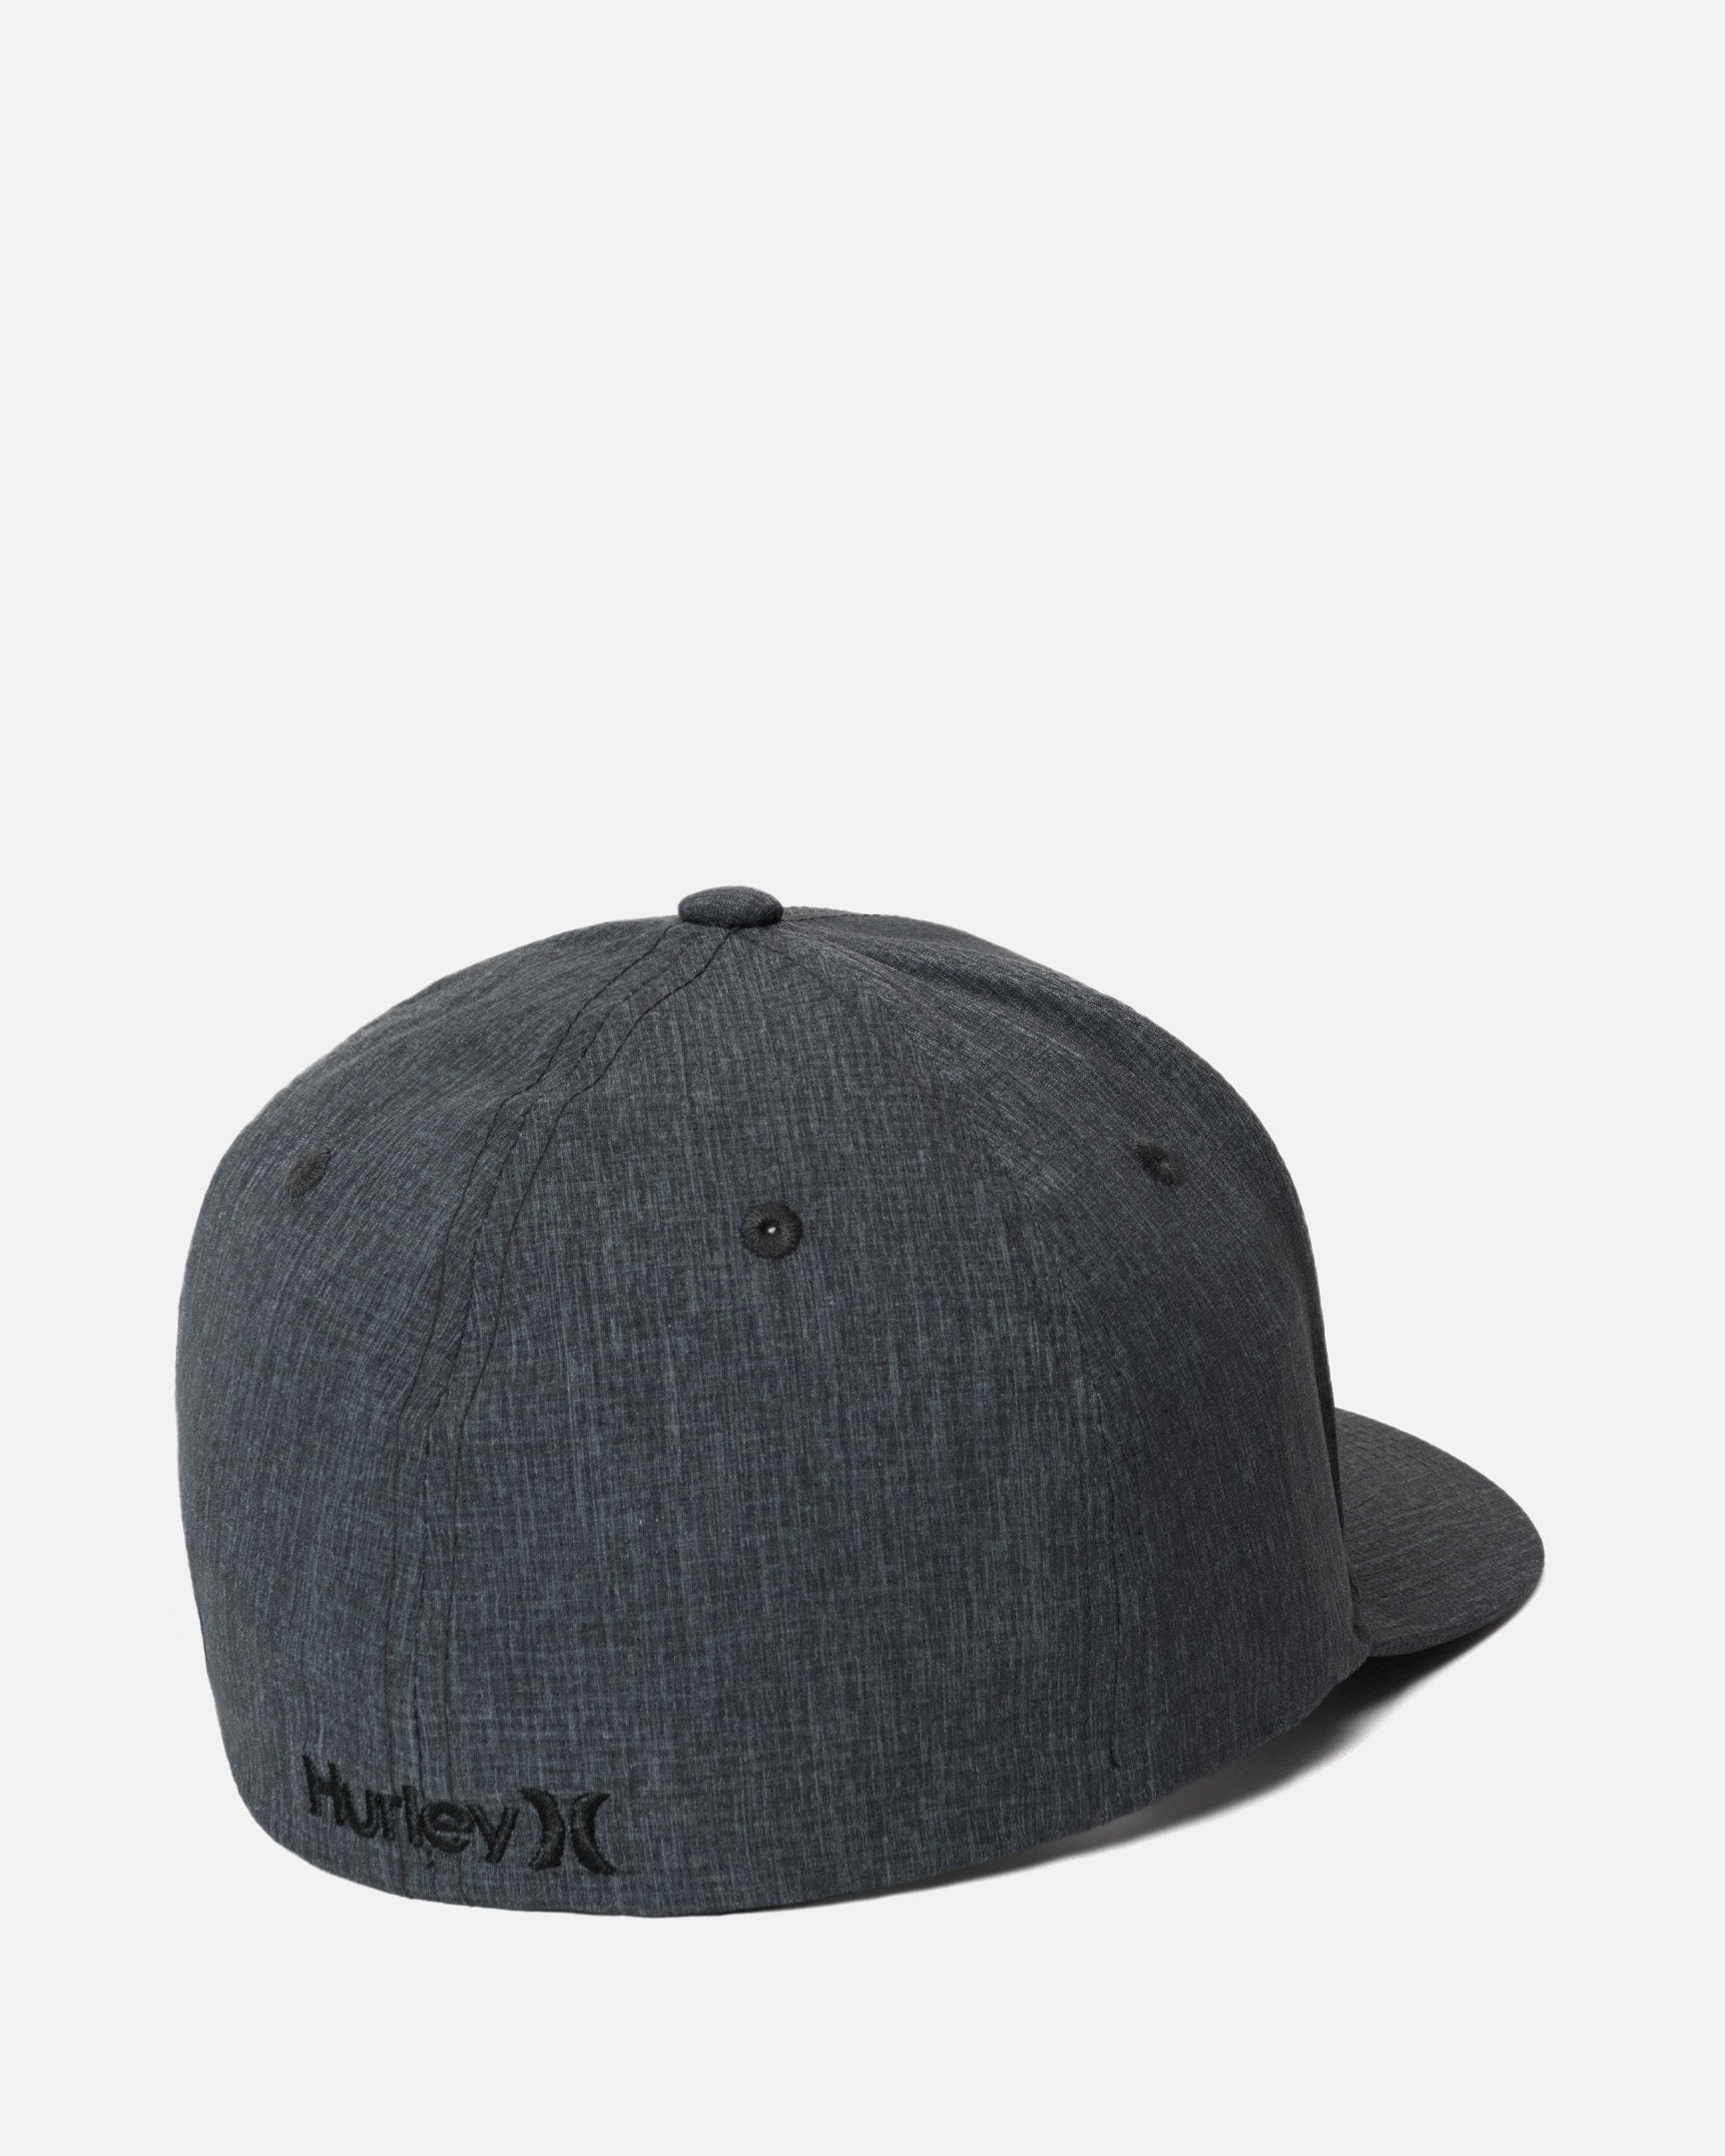 Hurley Brand Icon Texture Hat/Cap Flexfit L/XL Wolf Grey w/Black Logo NWTs  